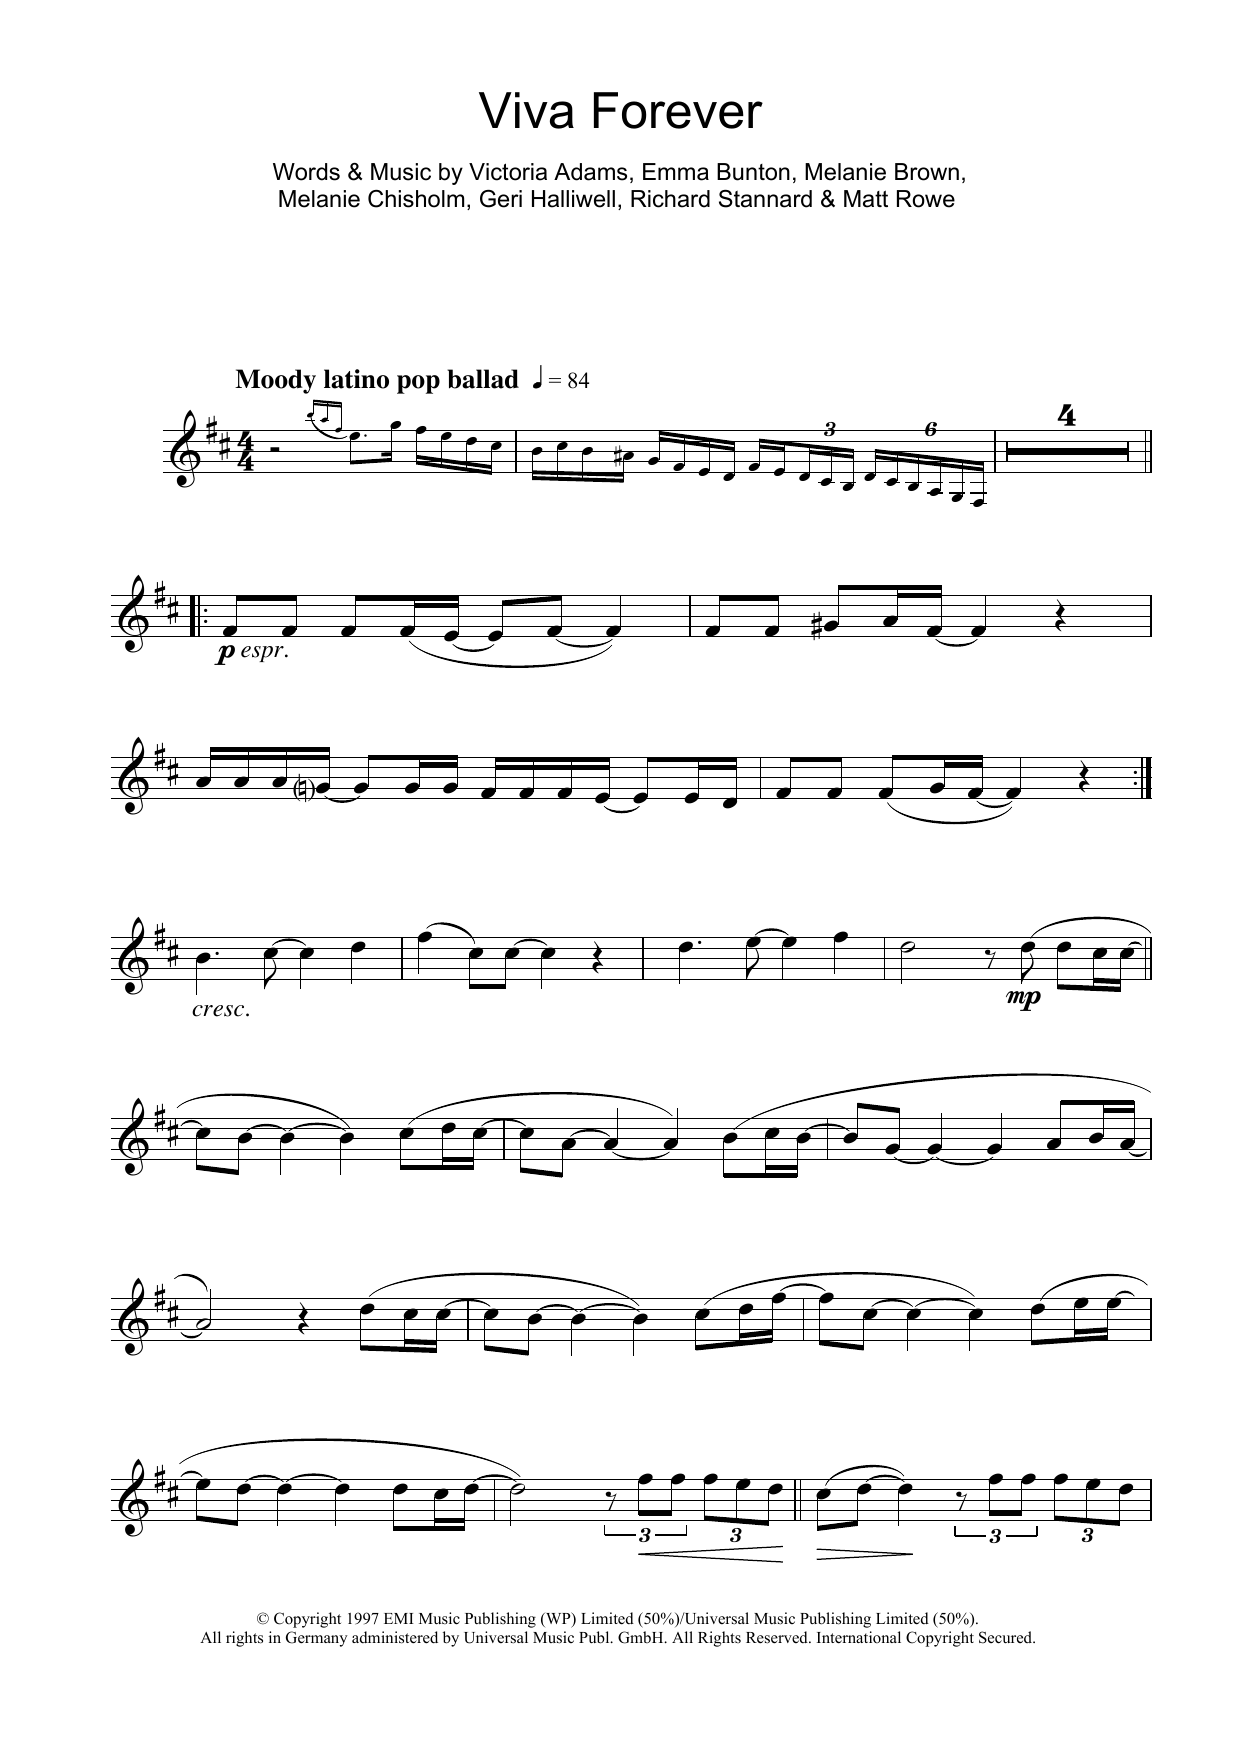 Spice Girls Viva Forever Sheet Music Notes & Chords for Flute - Download or Print PDF